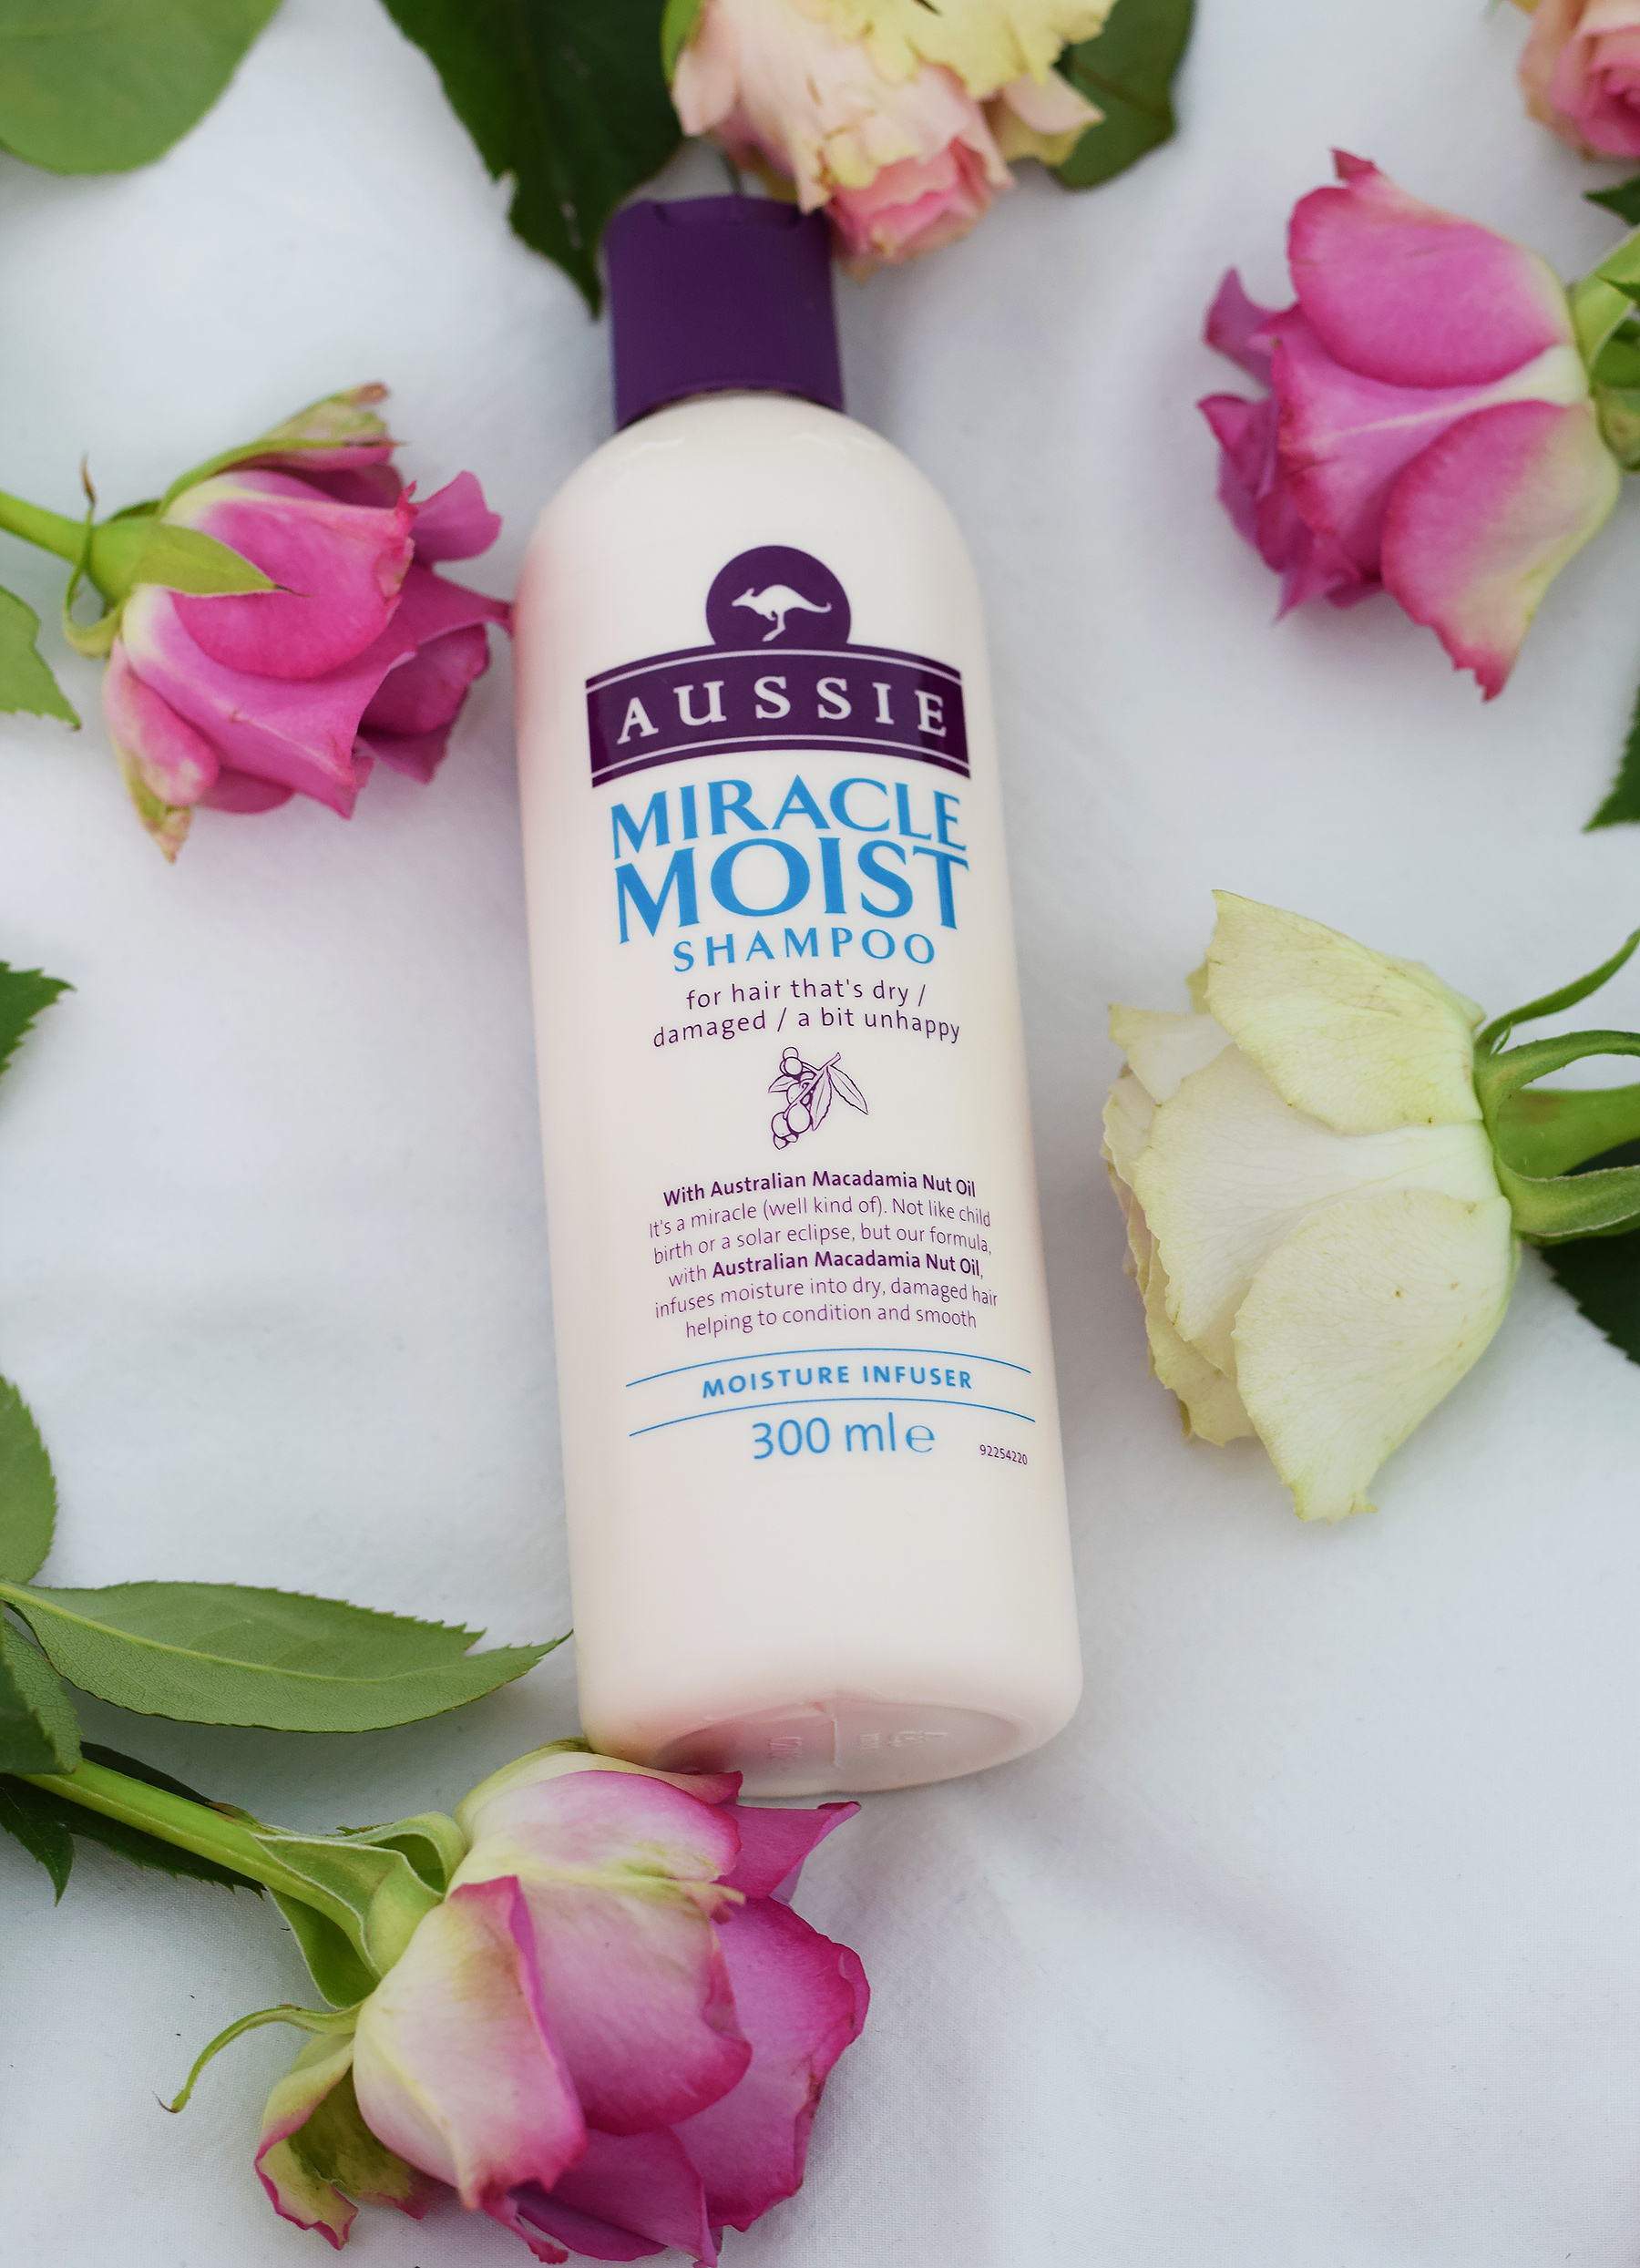 Aussie Miracle Moist Shampoo review